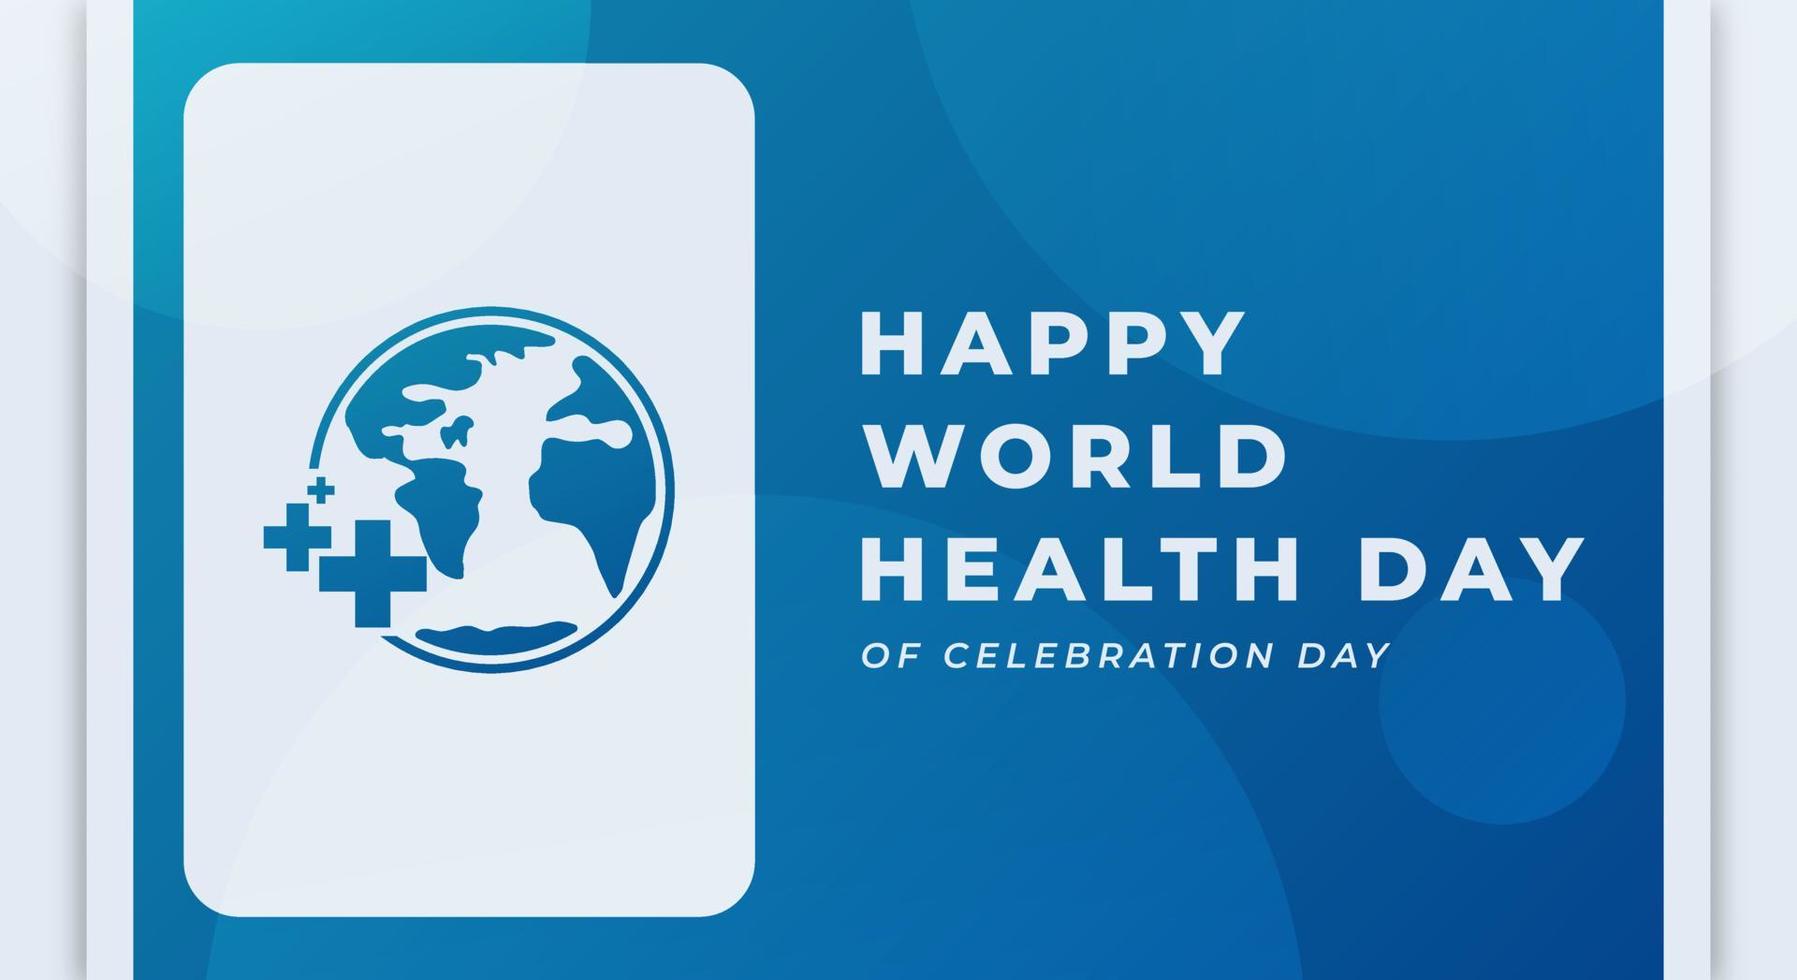 World Health Day Celebration Vector Design Illustration for Background, Poster, Banner, Advertising, Greeting Card